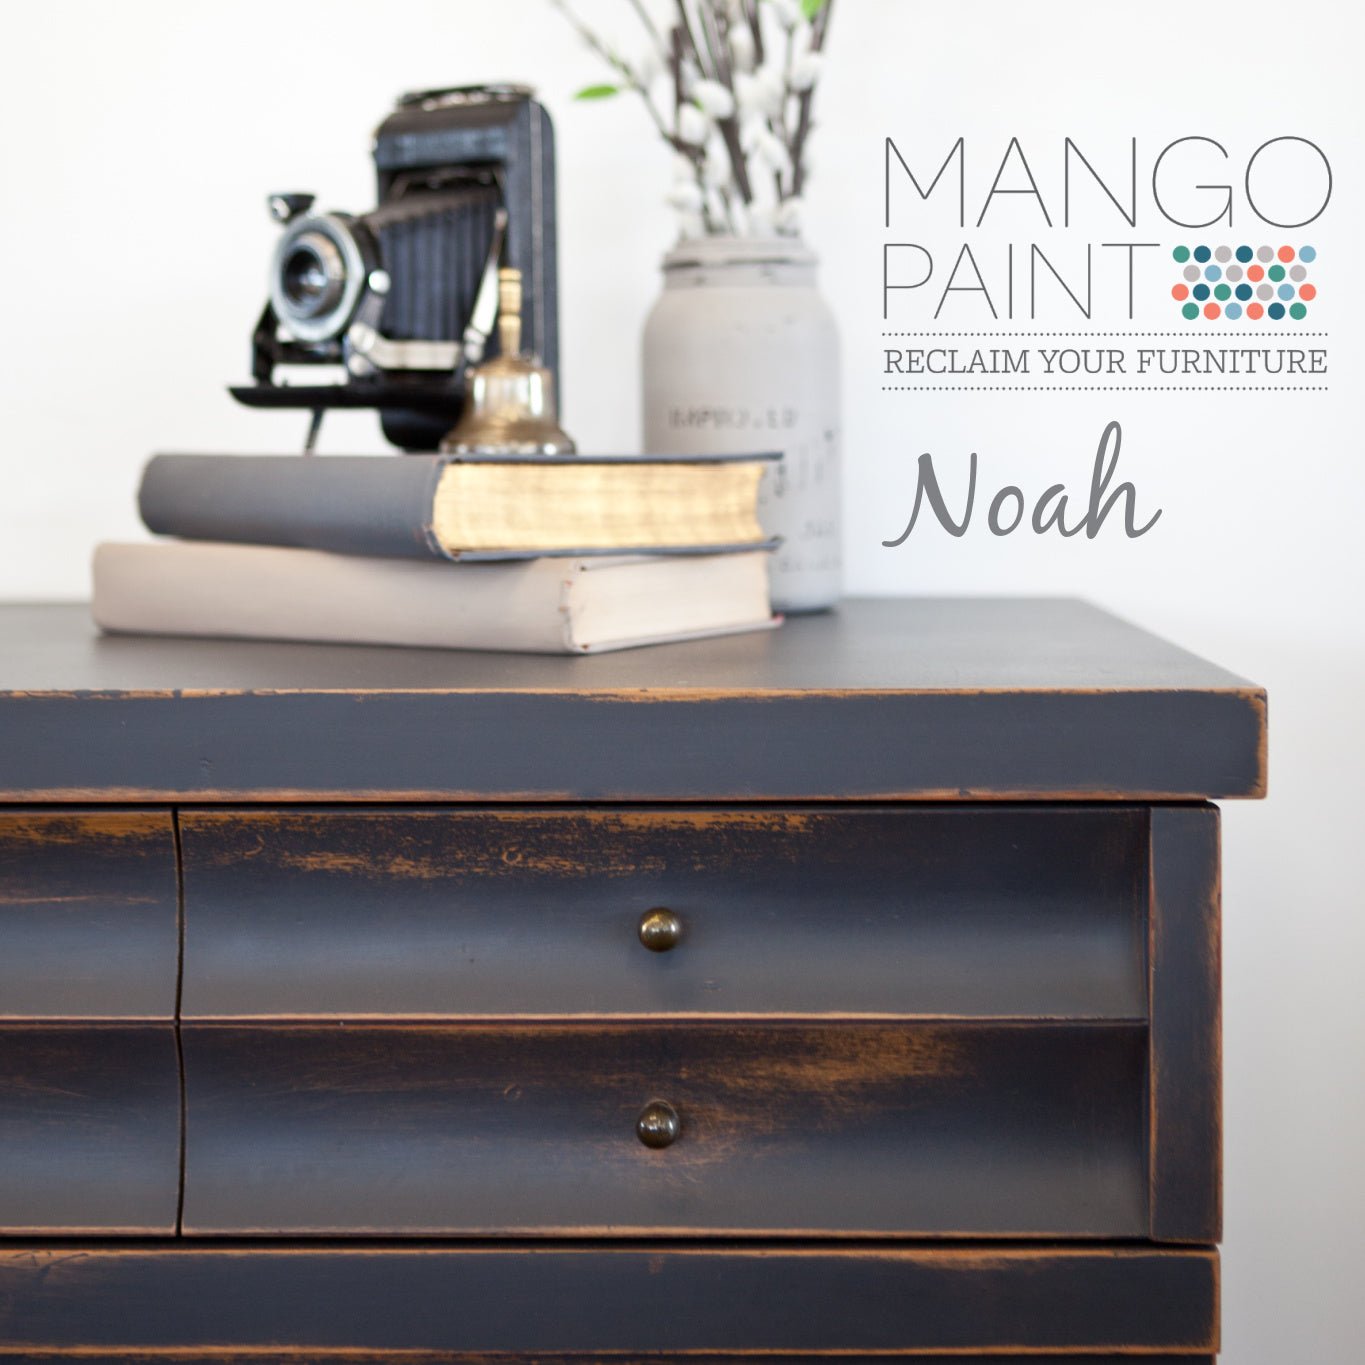 mango paint noah - 2